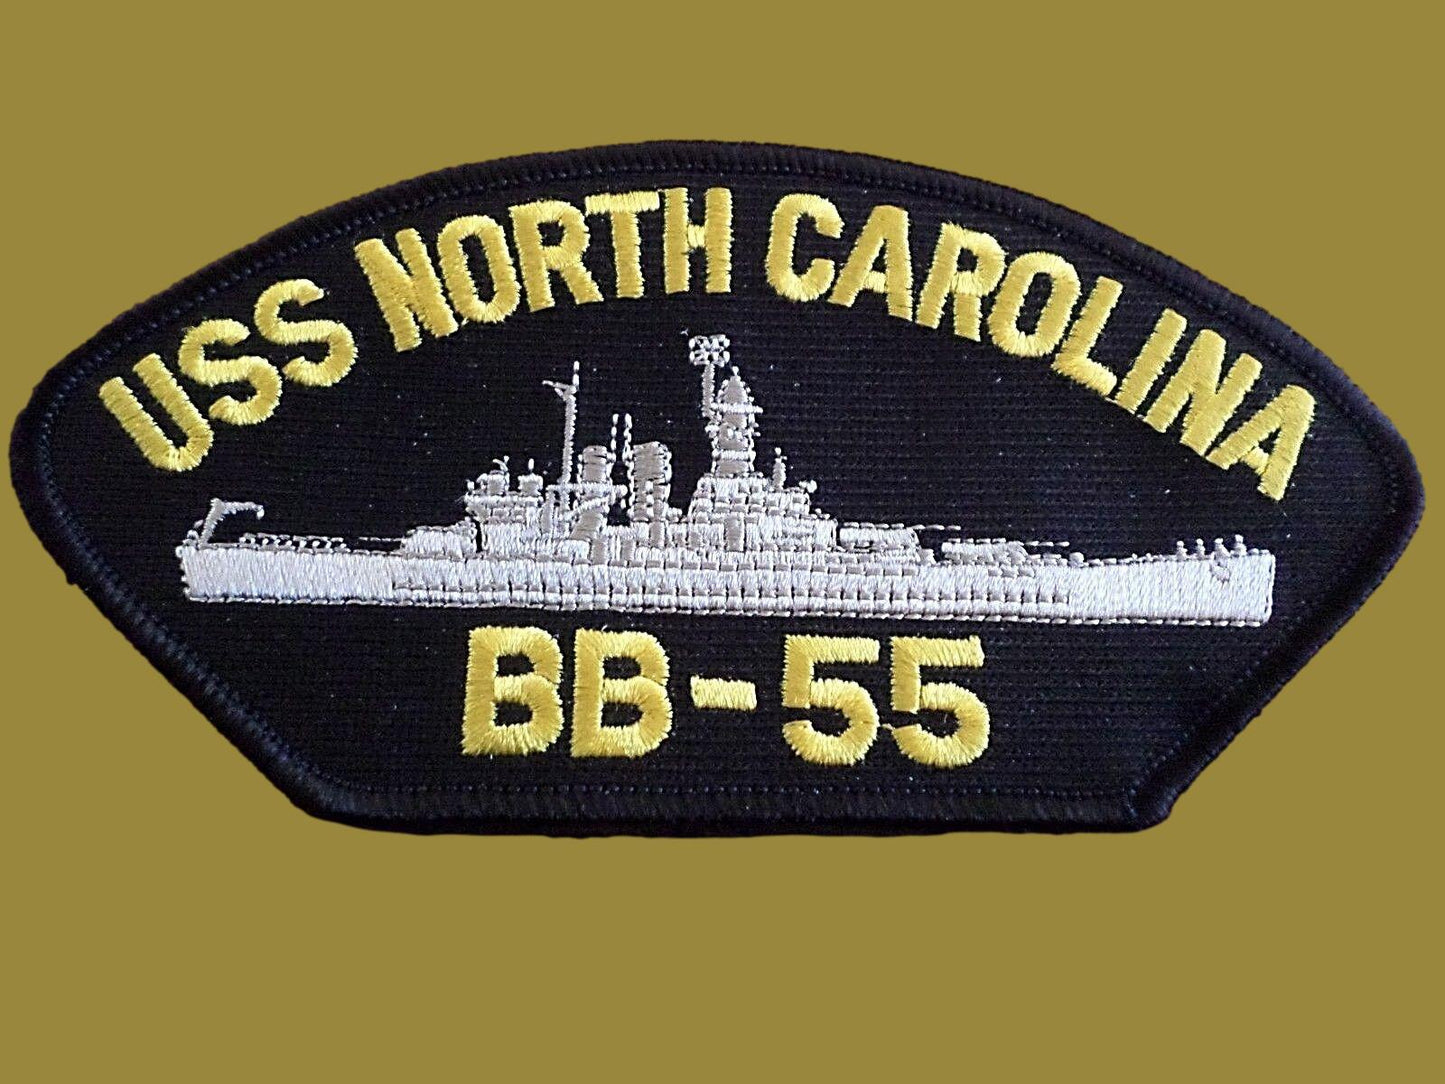 USS NORTH CAROLINA BB-55 U.S NAVY SHIP HAT PATCH BATTLESHIP USA MADE